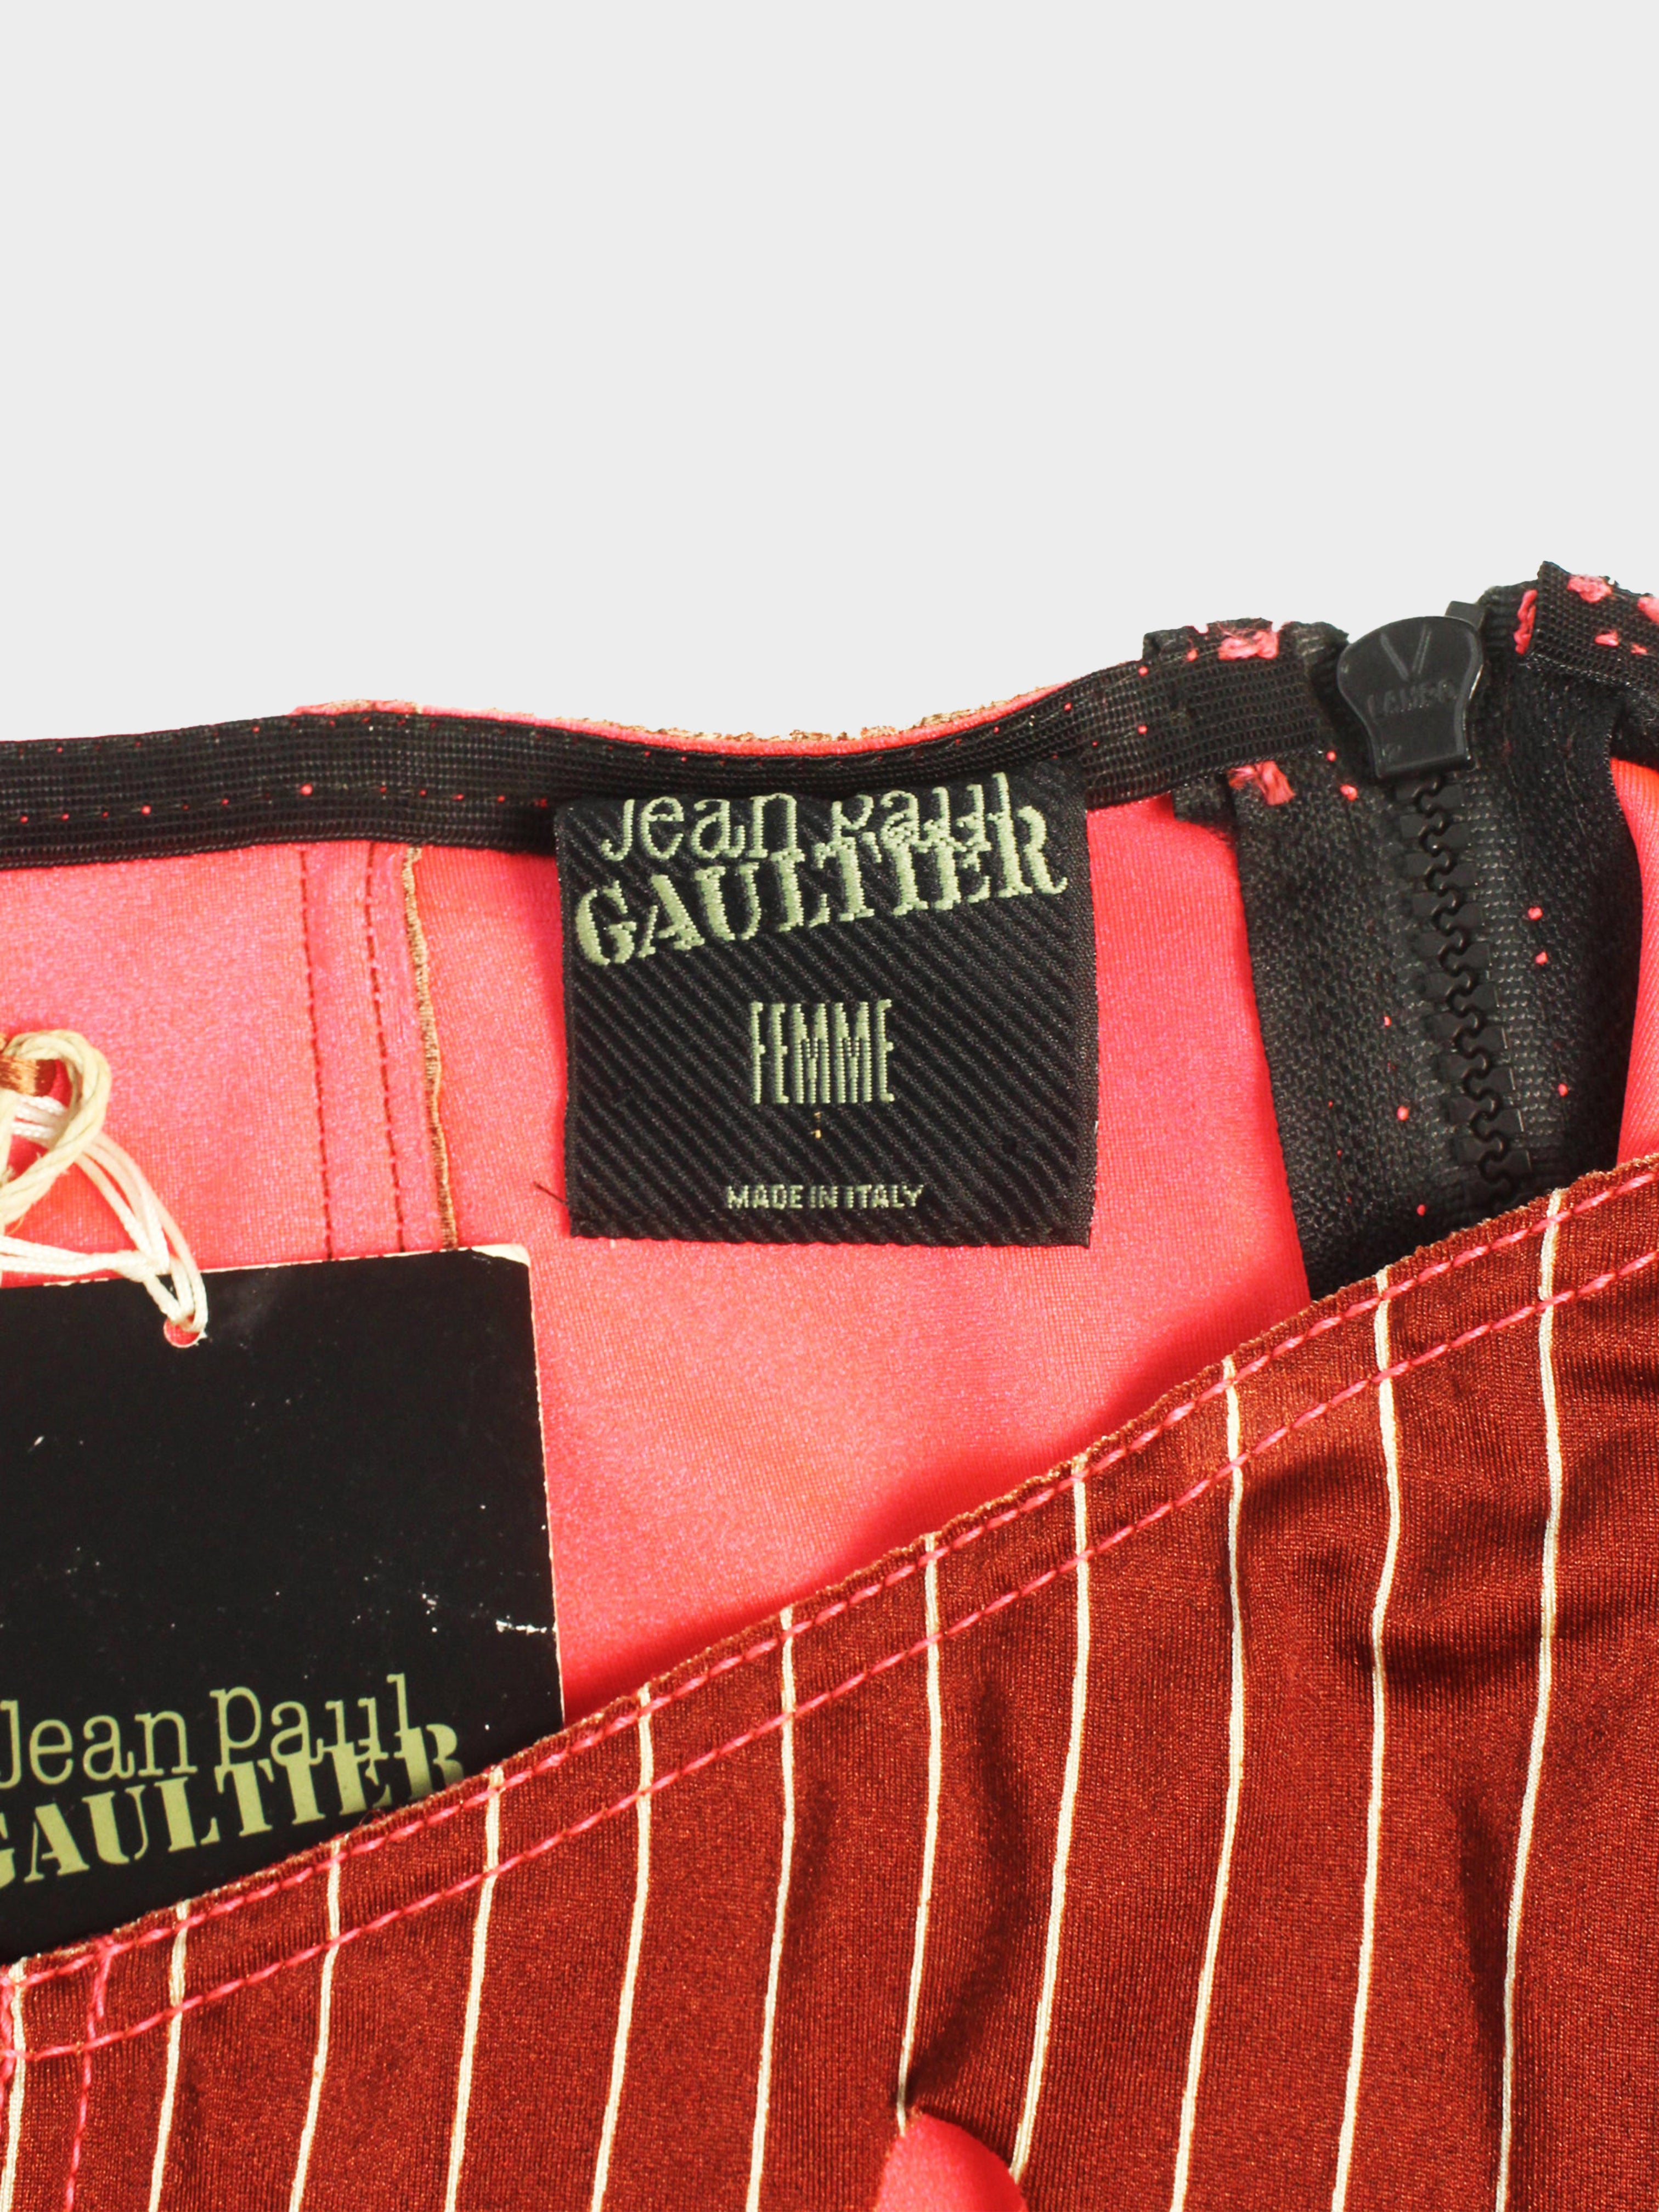 Jean Paul Gaultier 1990s FEMME Red Pinstripe Skirt